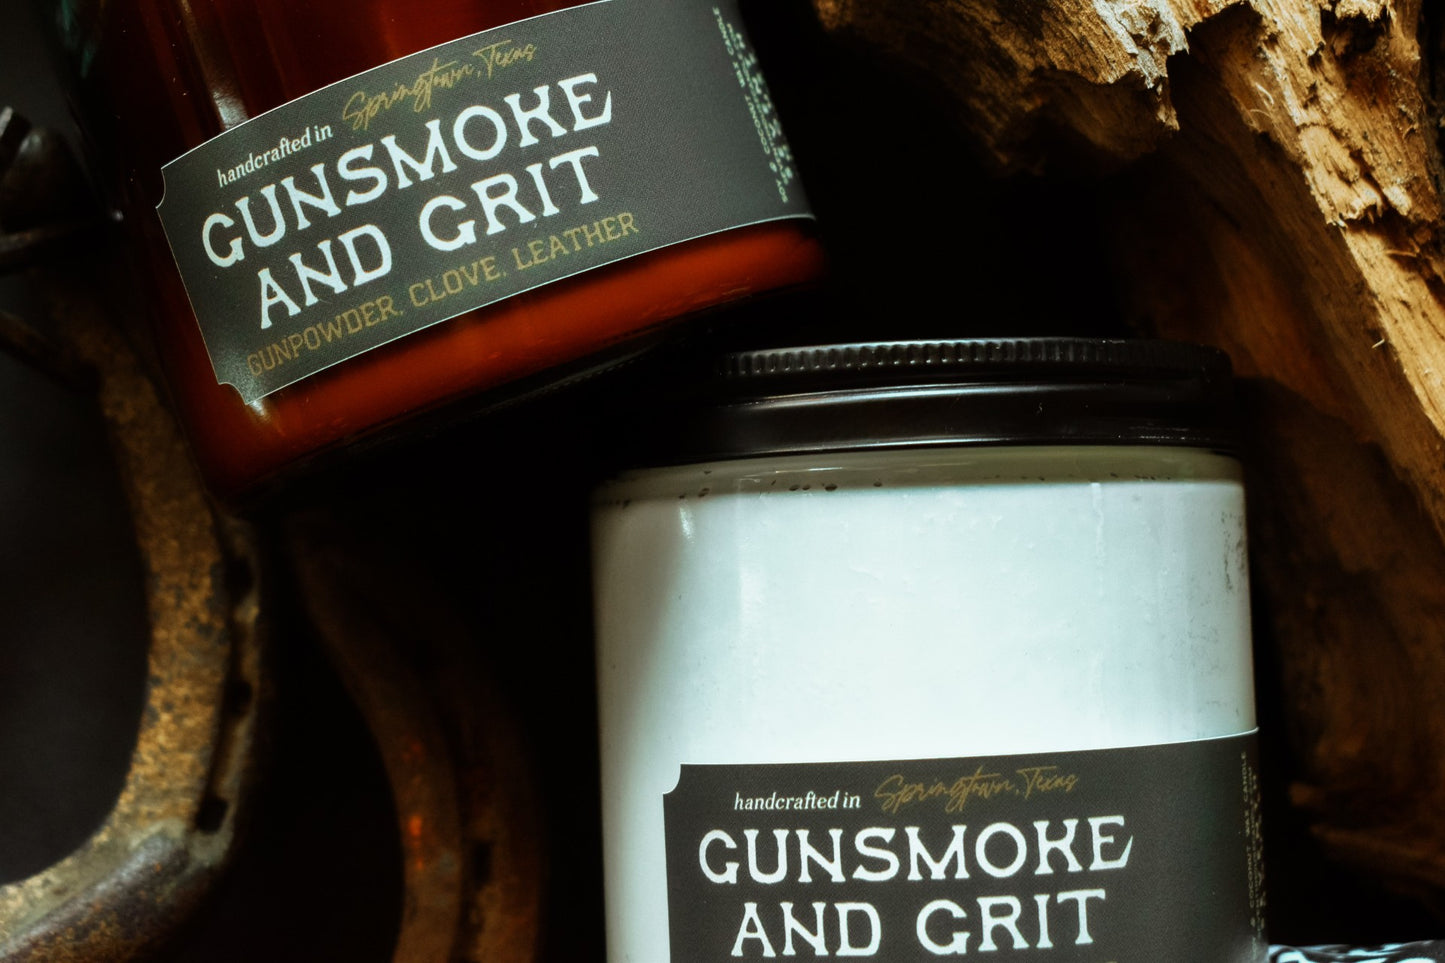 GUNSMOKE & GRIT - Gunpowder, Clove, Leather